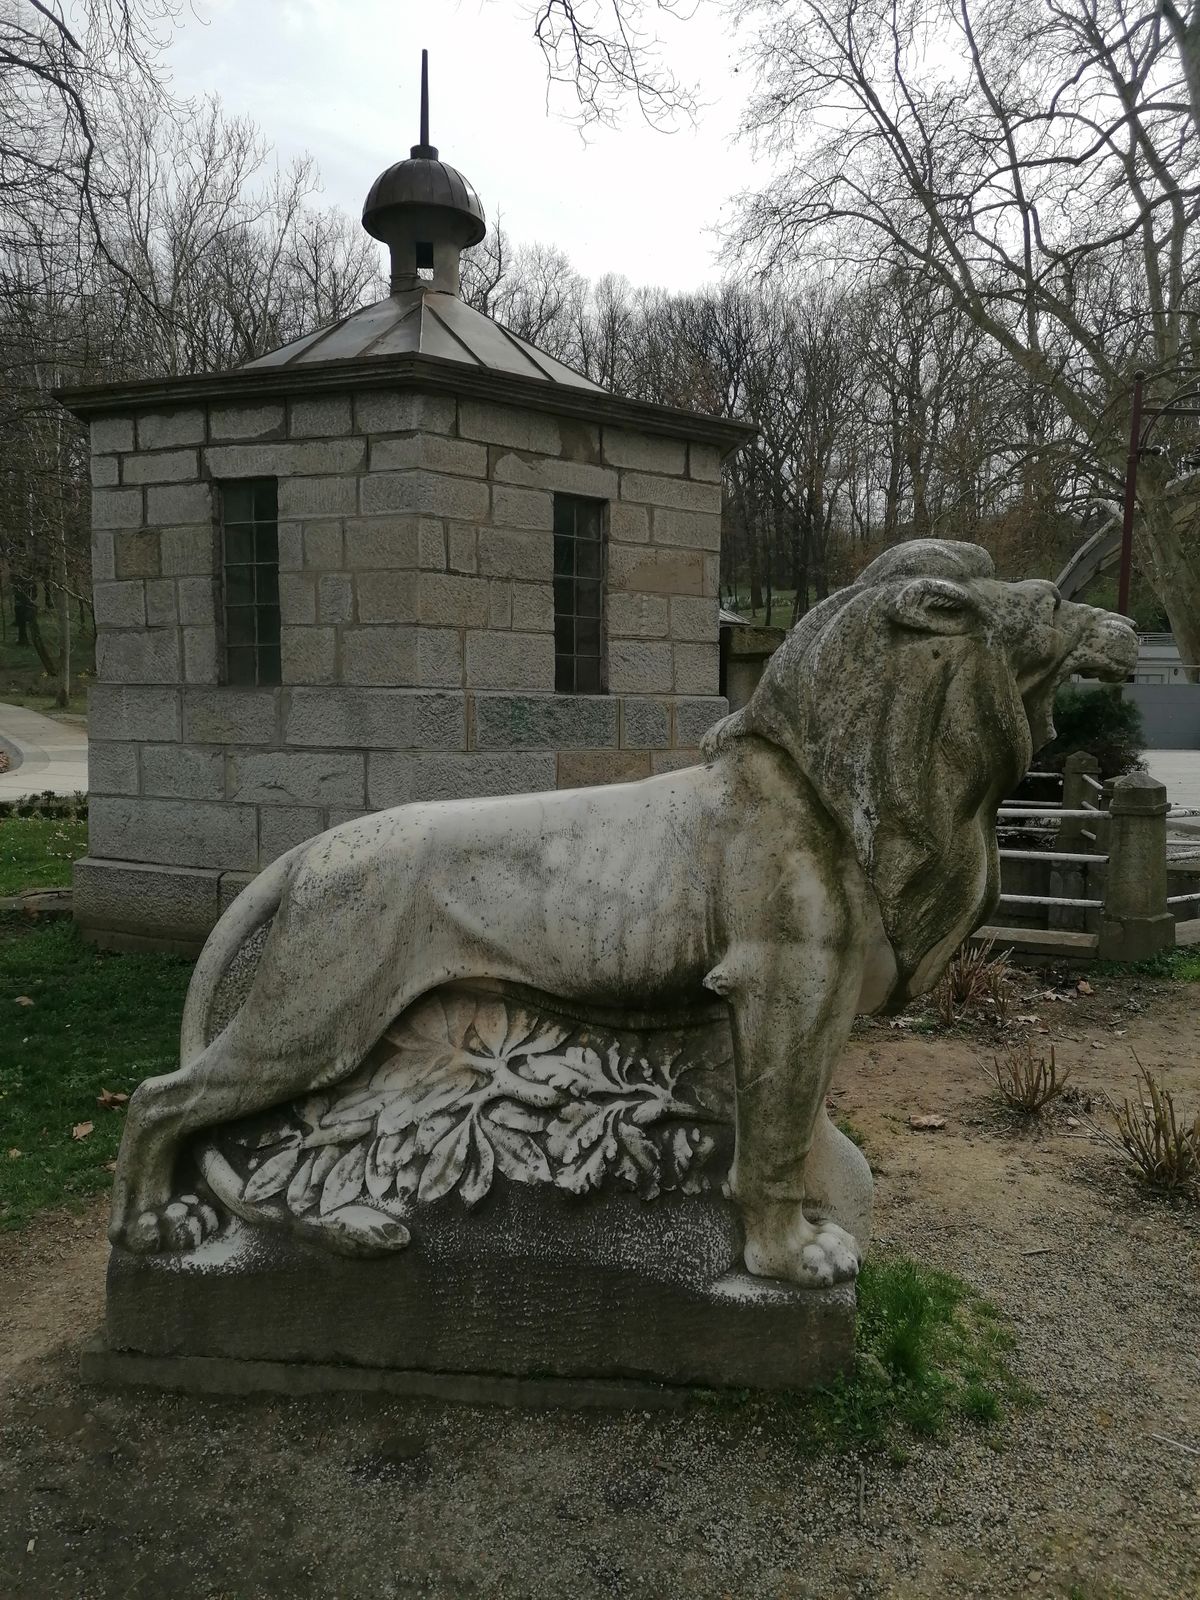 Stari lav iz Bukovičke banje